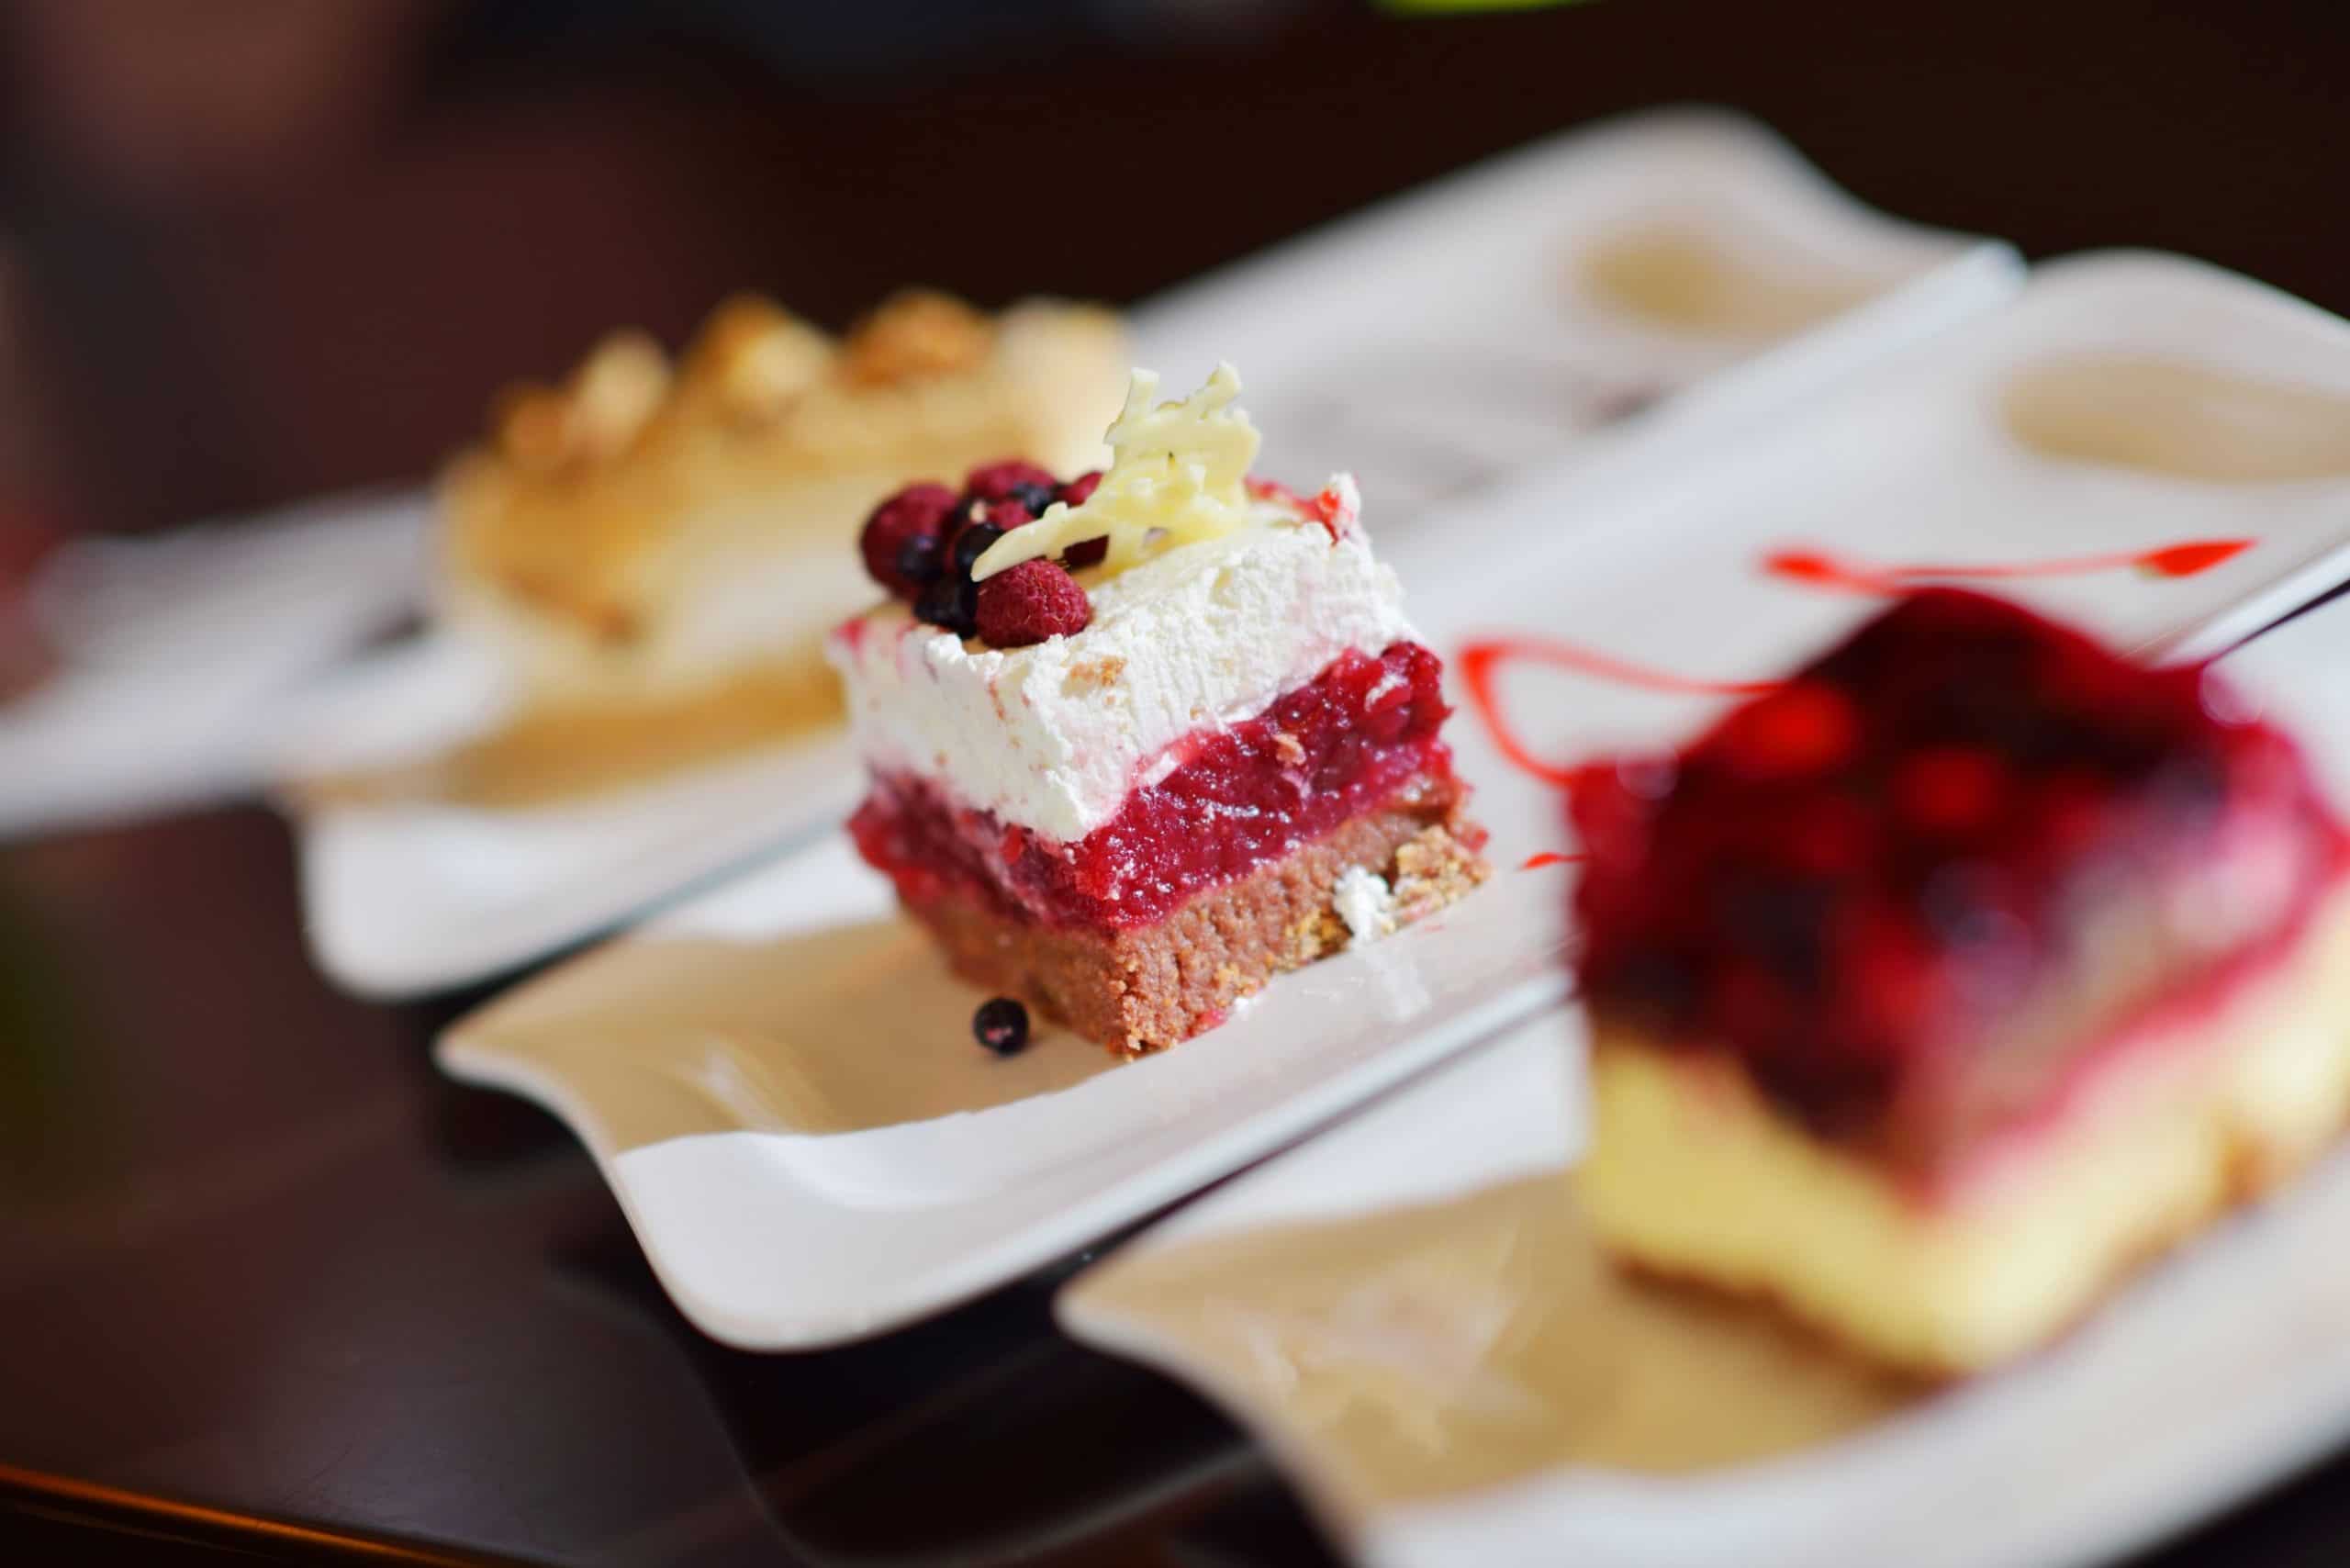 Small desserts on plates.